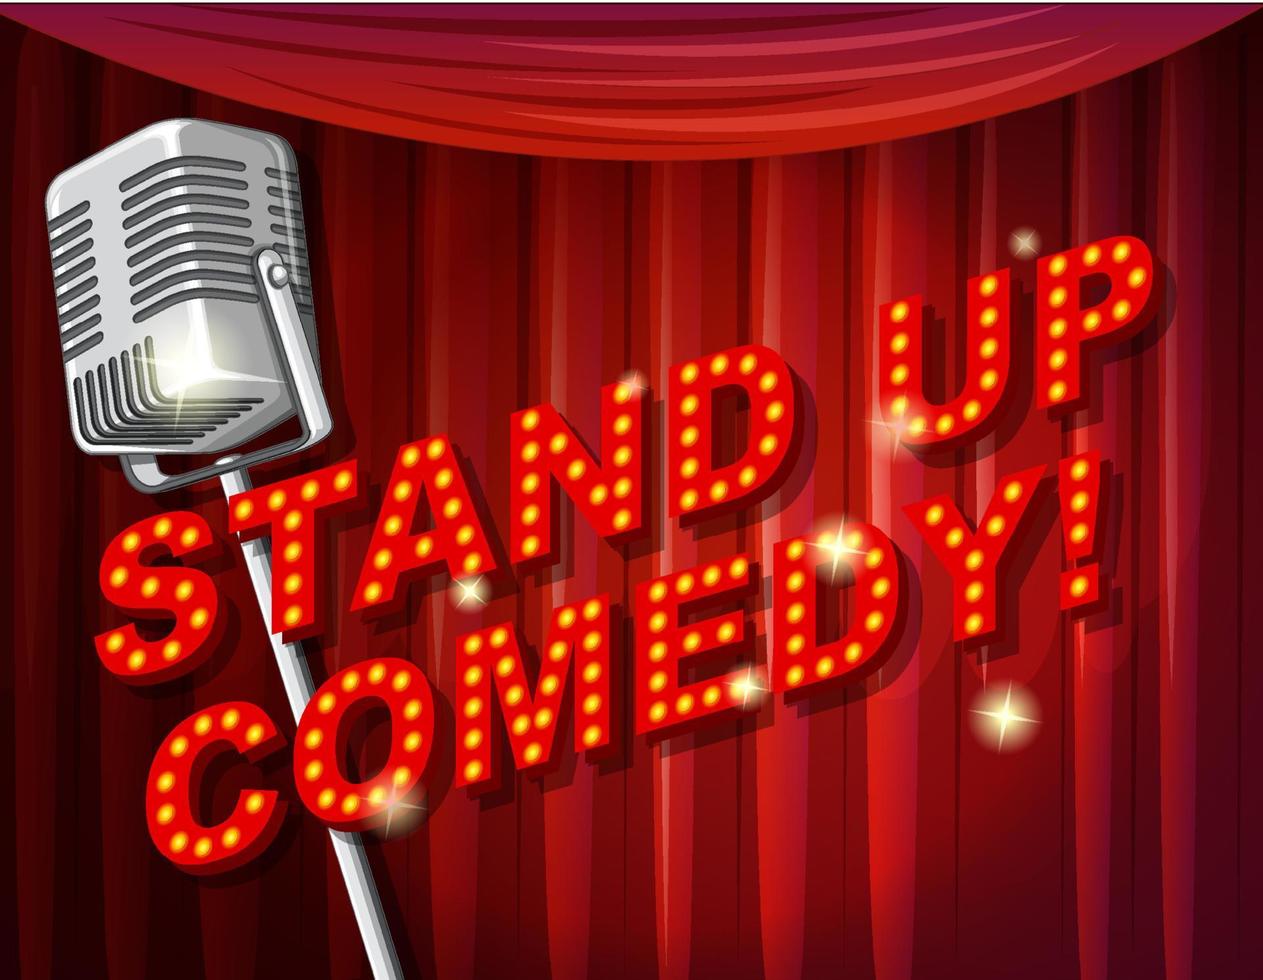 Stand up comedy banner con micrófono vintage vector